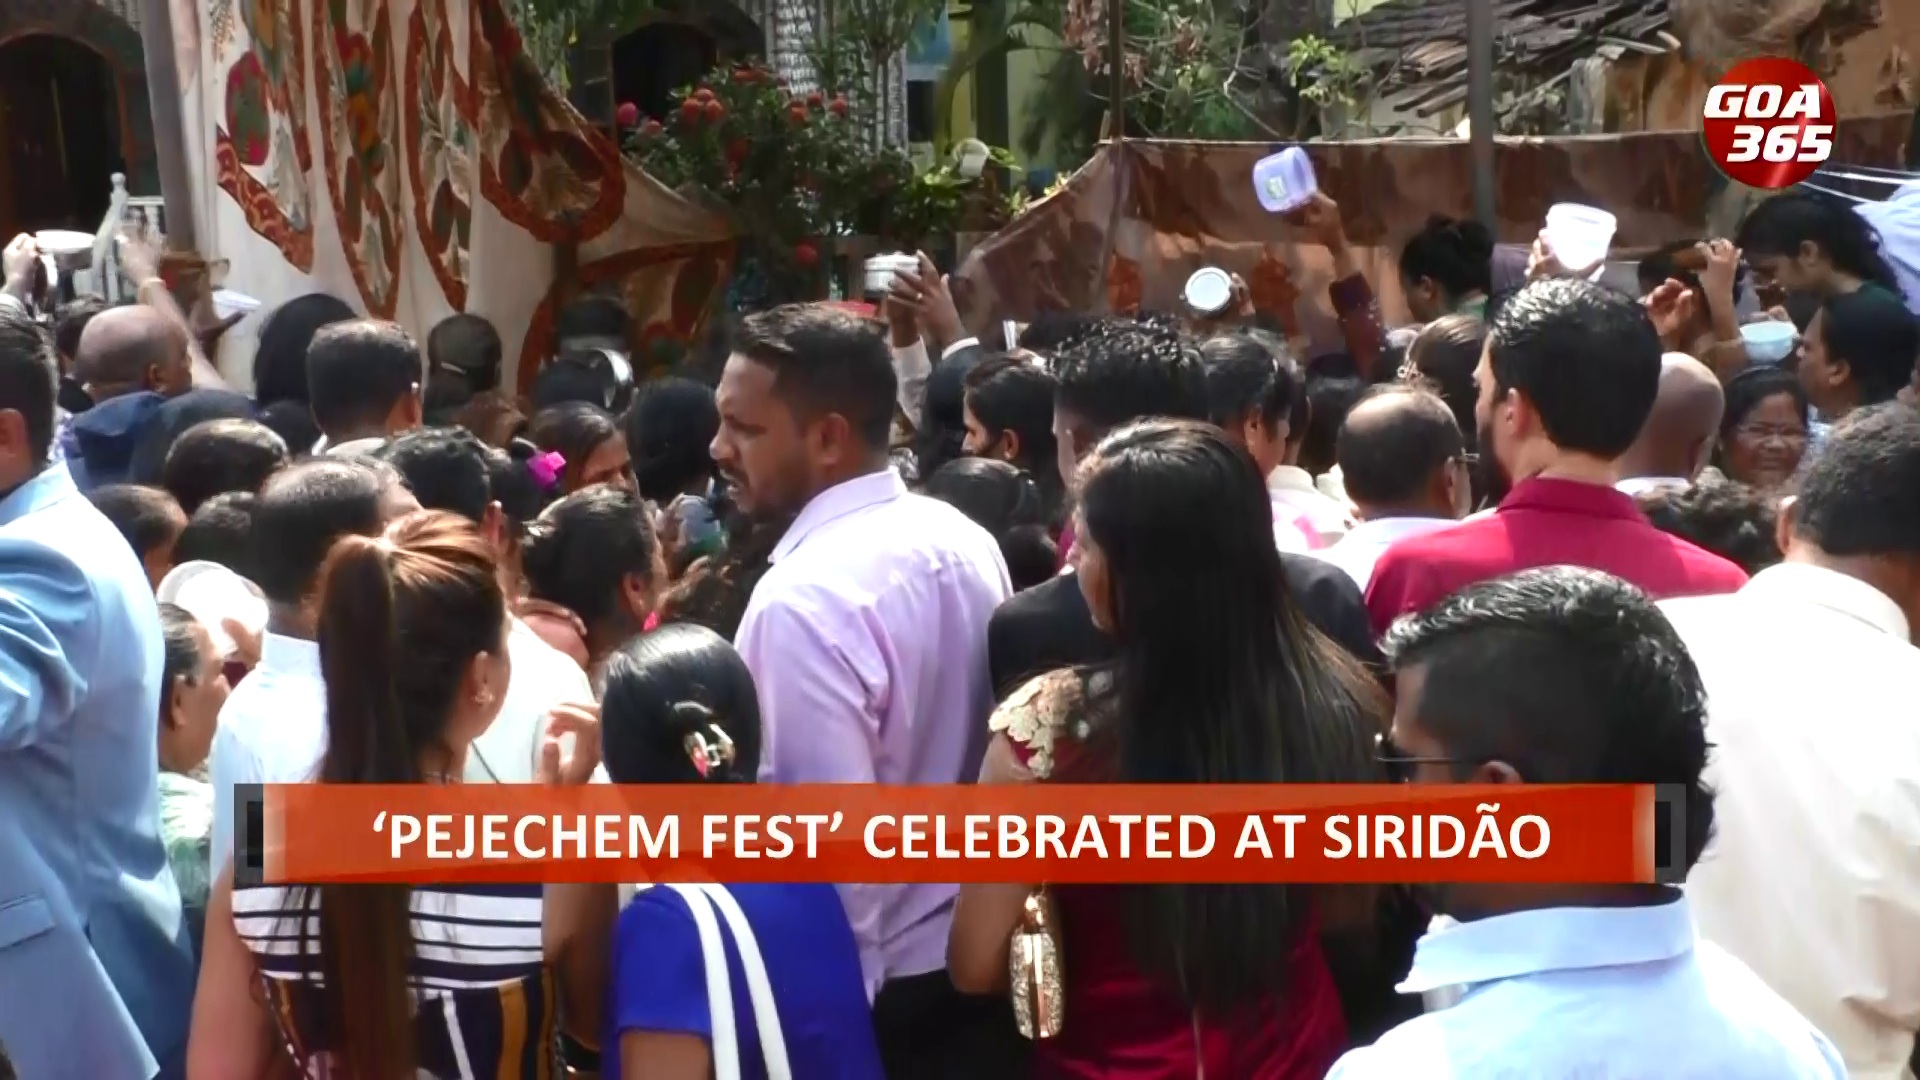 Traditional Pejechem Fest celebrated at Siridao/Konkanni